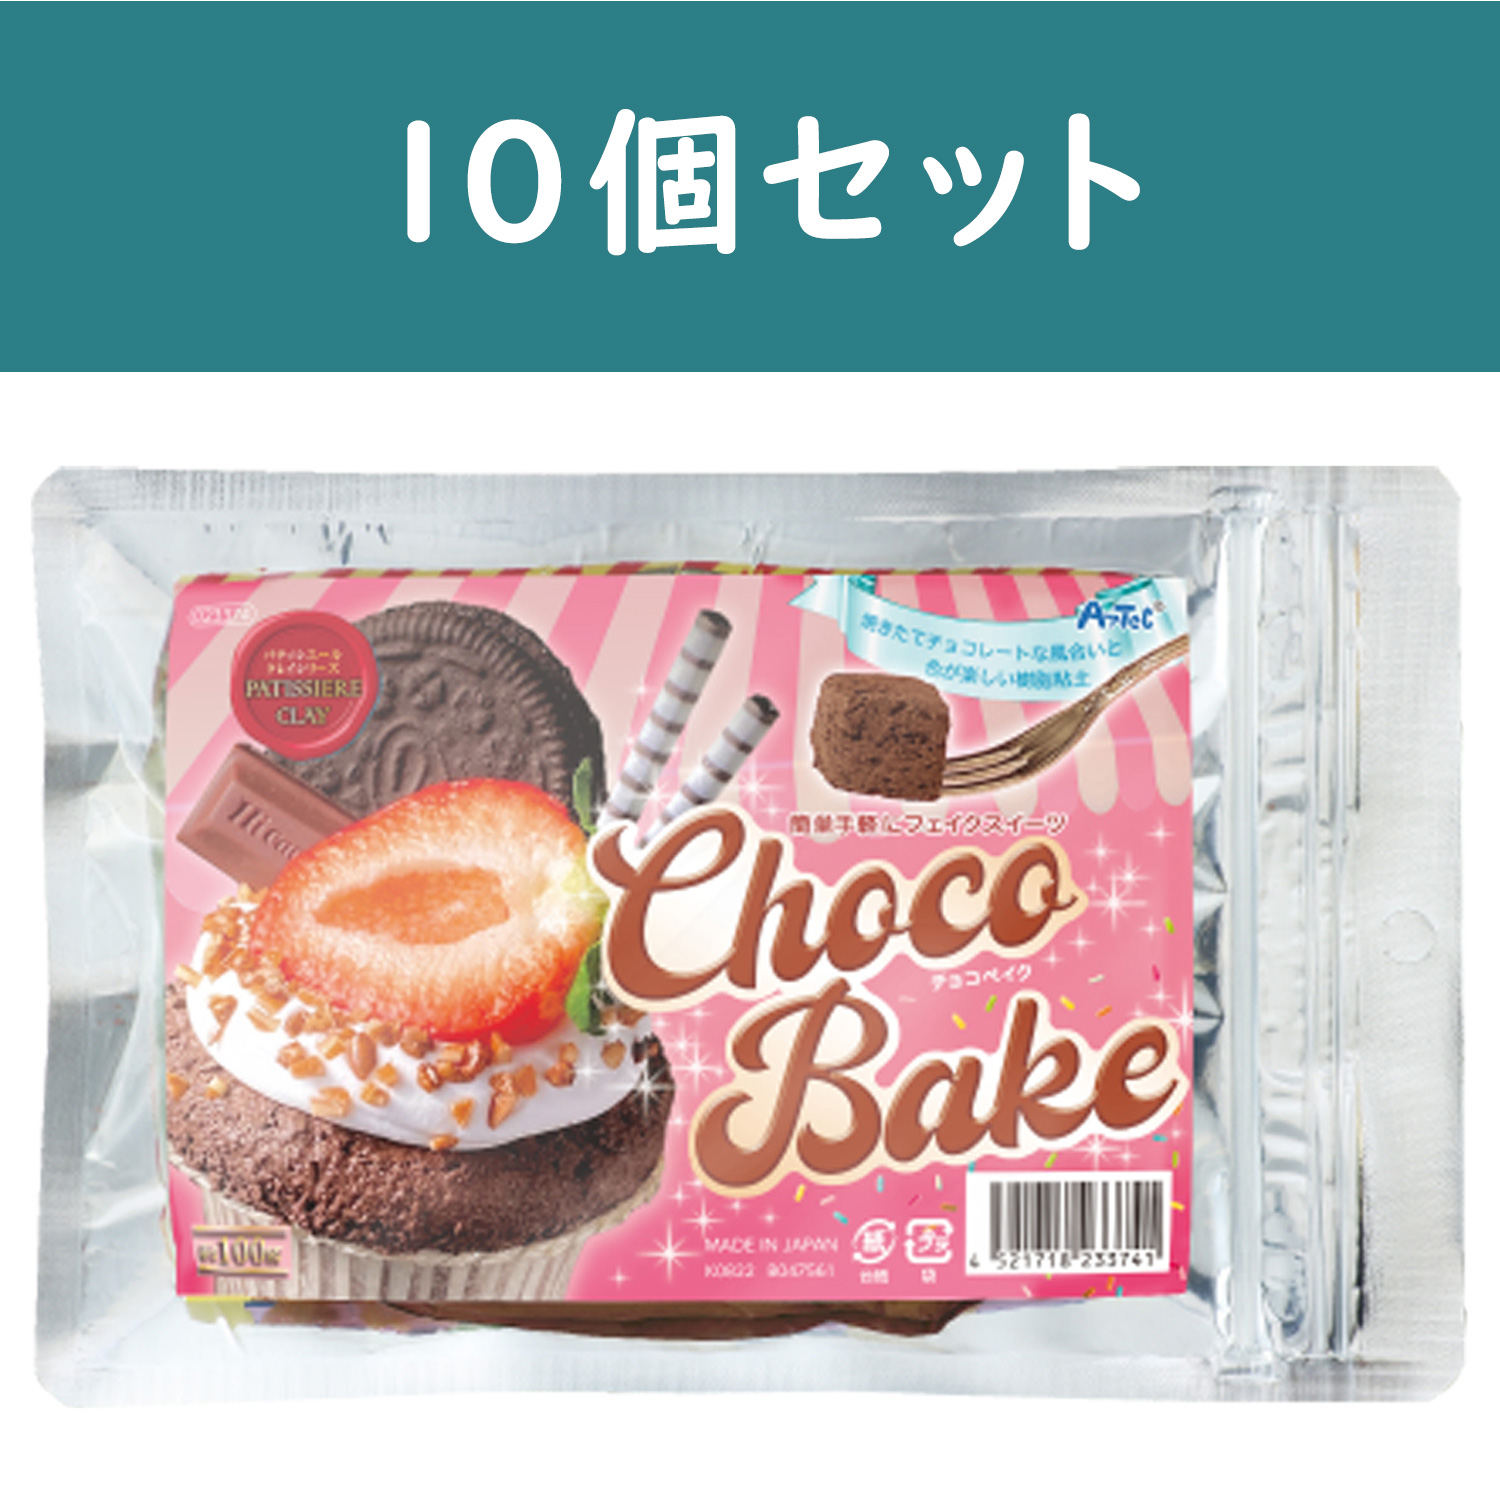 ATC23387-10 Artec", Pastry Clay Series Vanillatti chocolate bake approx.100g×10 pcs set (set)